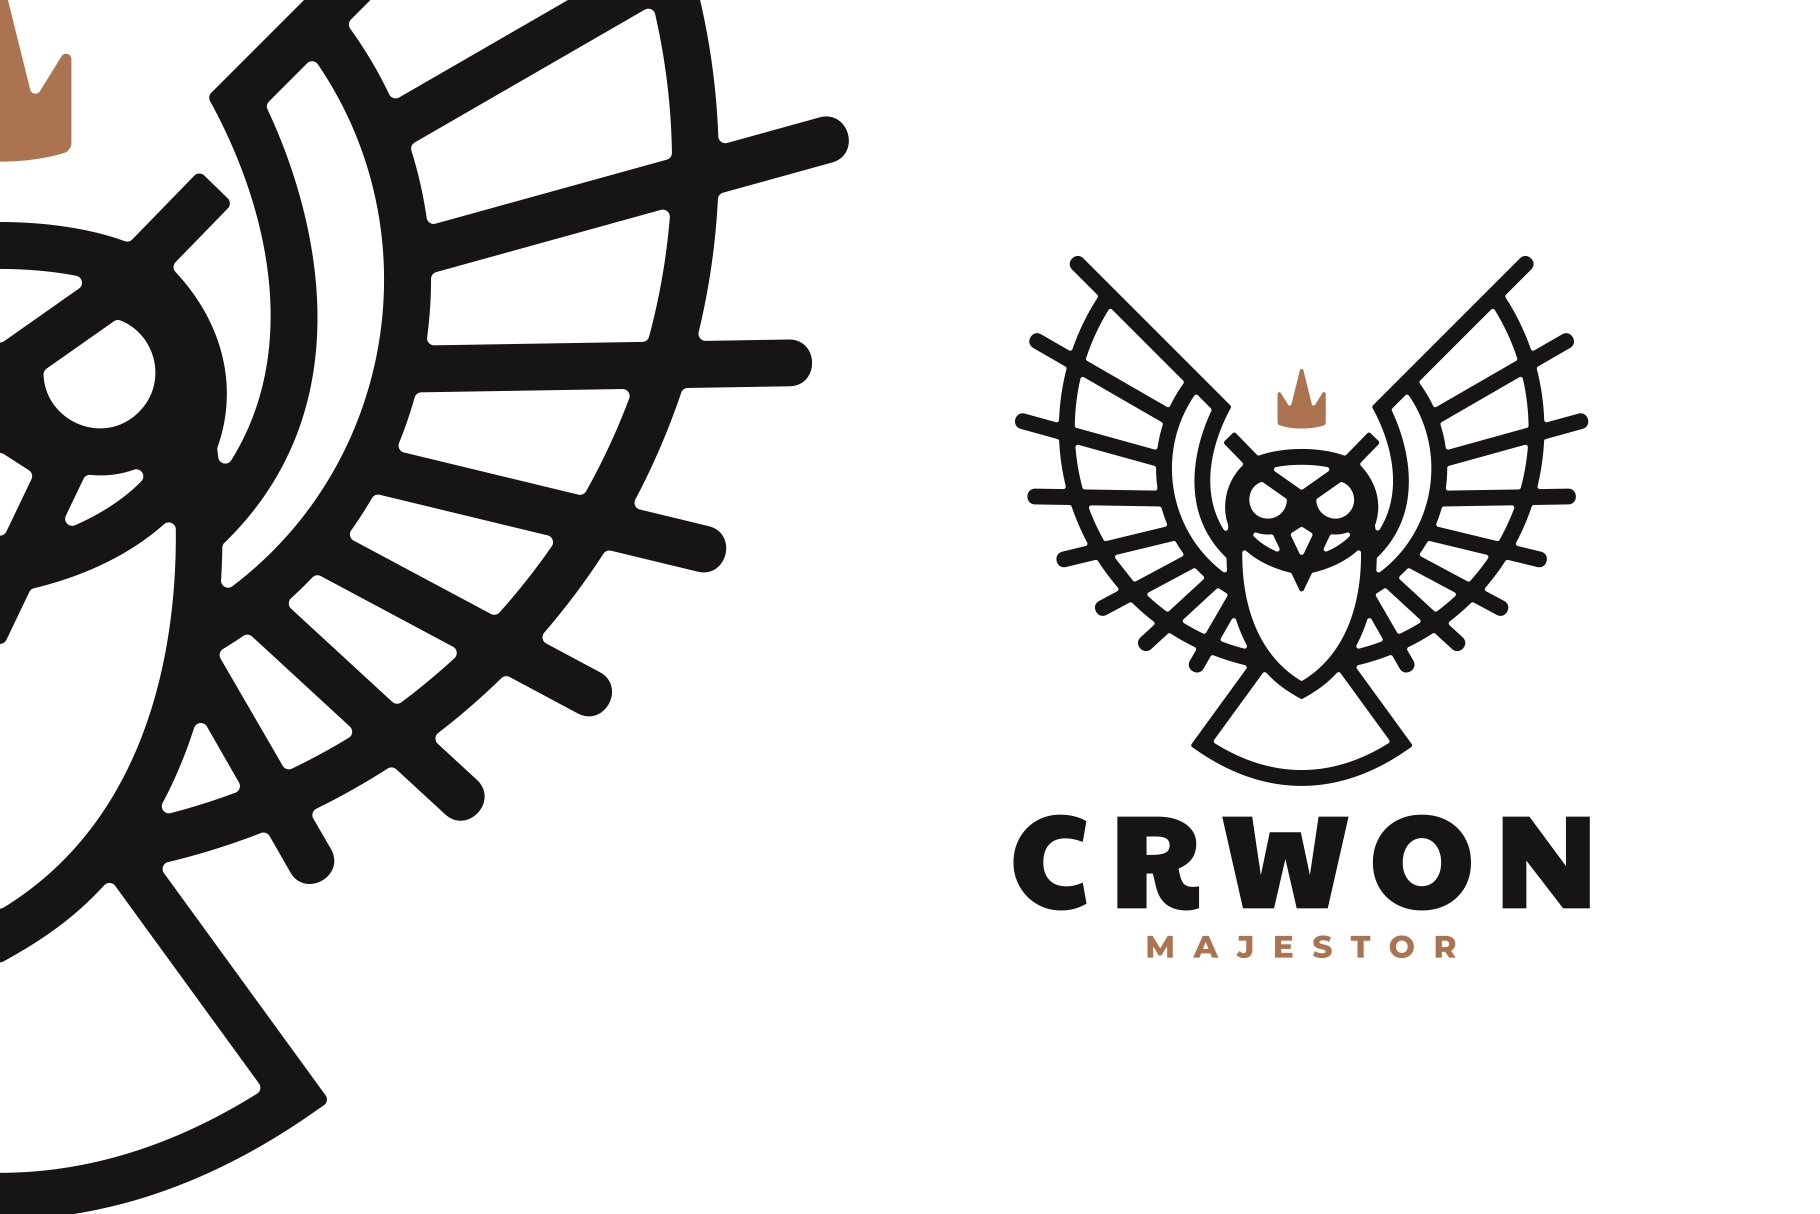 Owl Line Art Logo cover image.